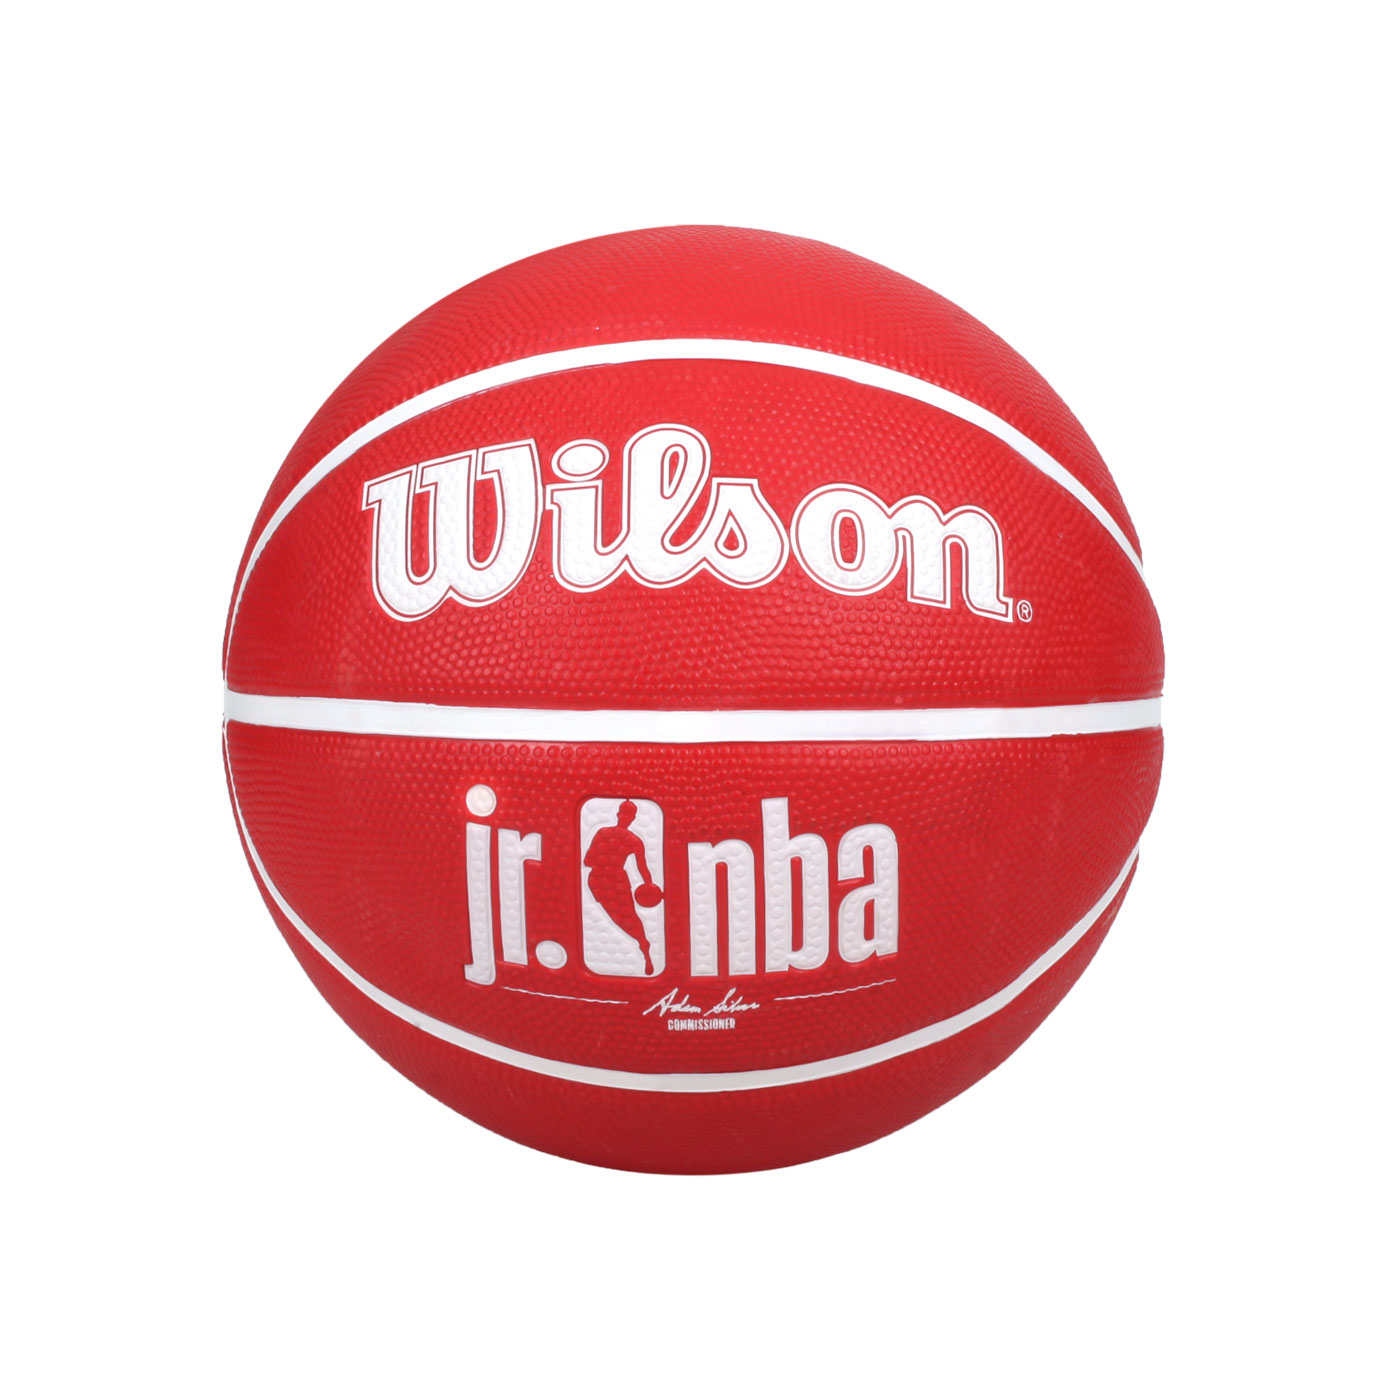 WILSON JR NBA DRV系列橡膠籃球#5 WTB9501XB05 - 紅白